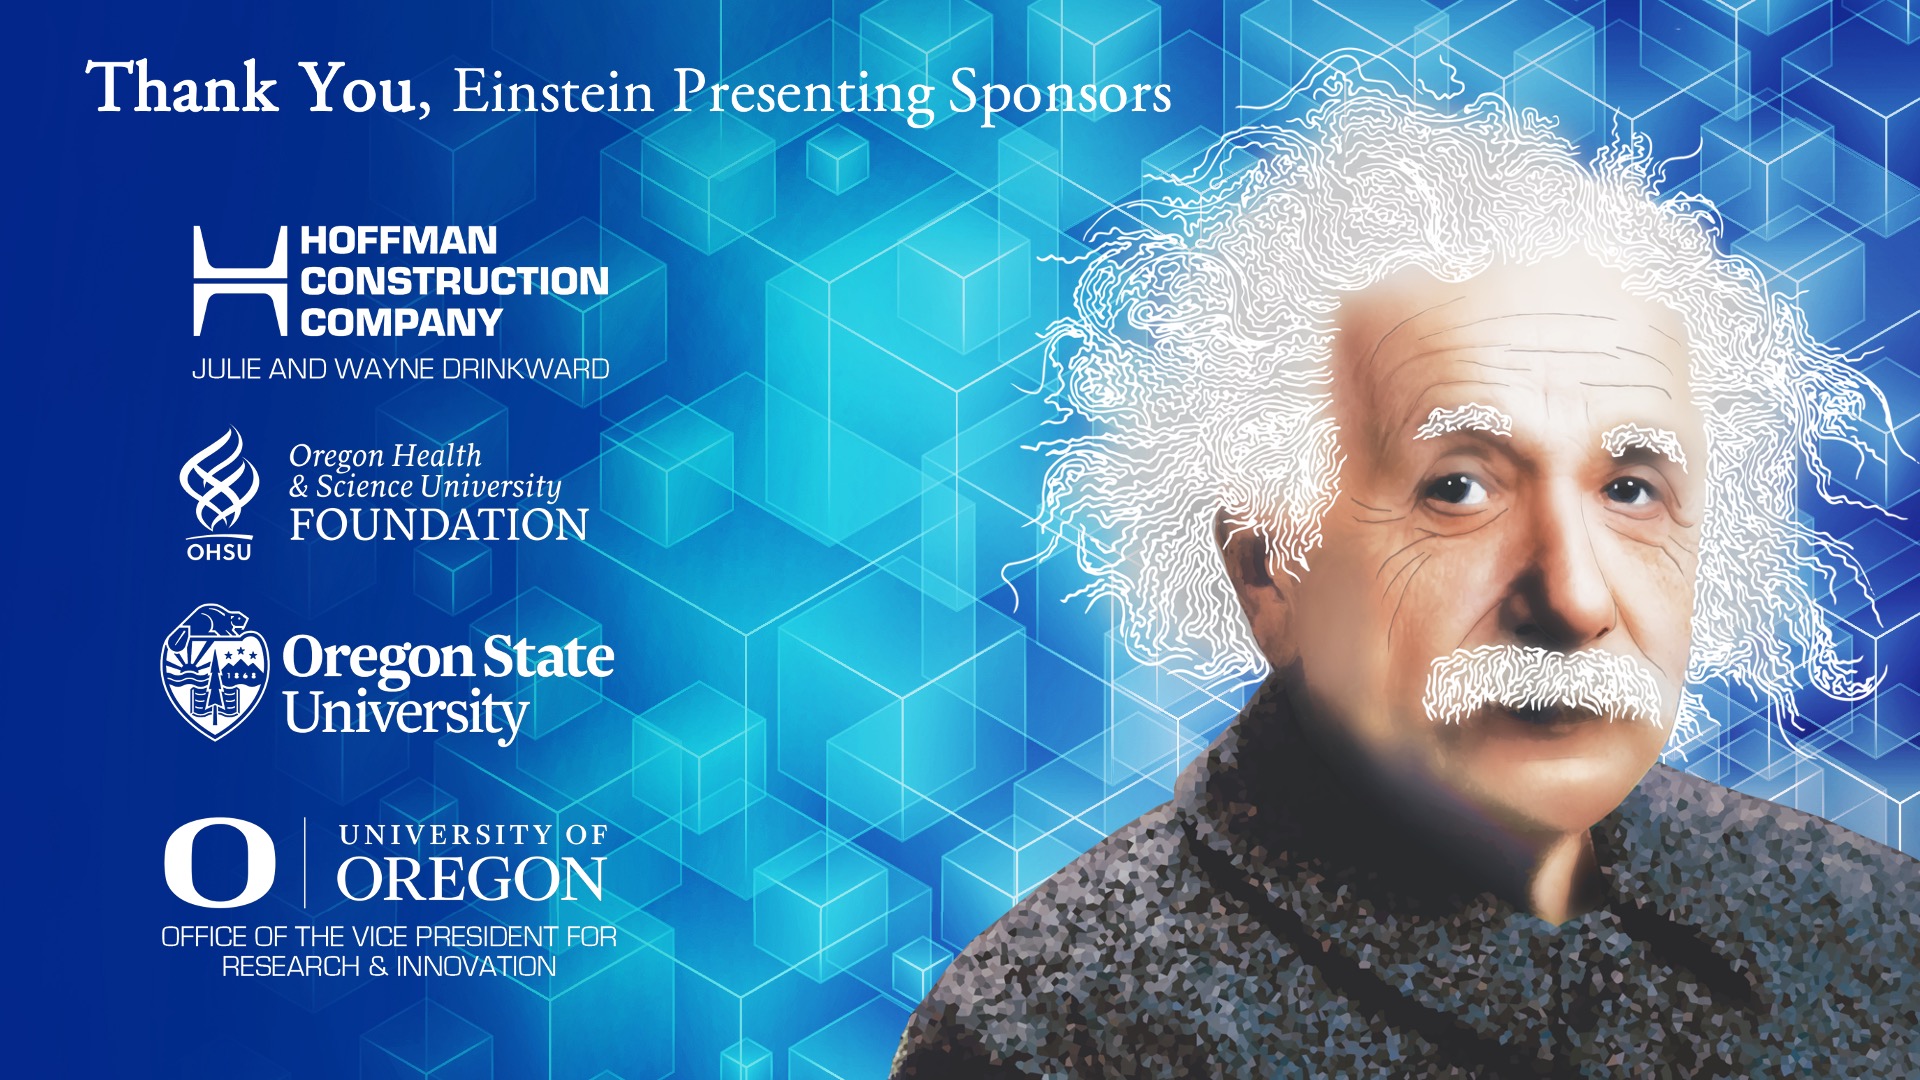 Thank you, Einstein Presenting Sponsors: Hoffman Construction Company, OHSU Foundation, Oregon State University, University of Oregon